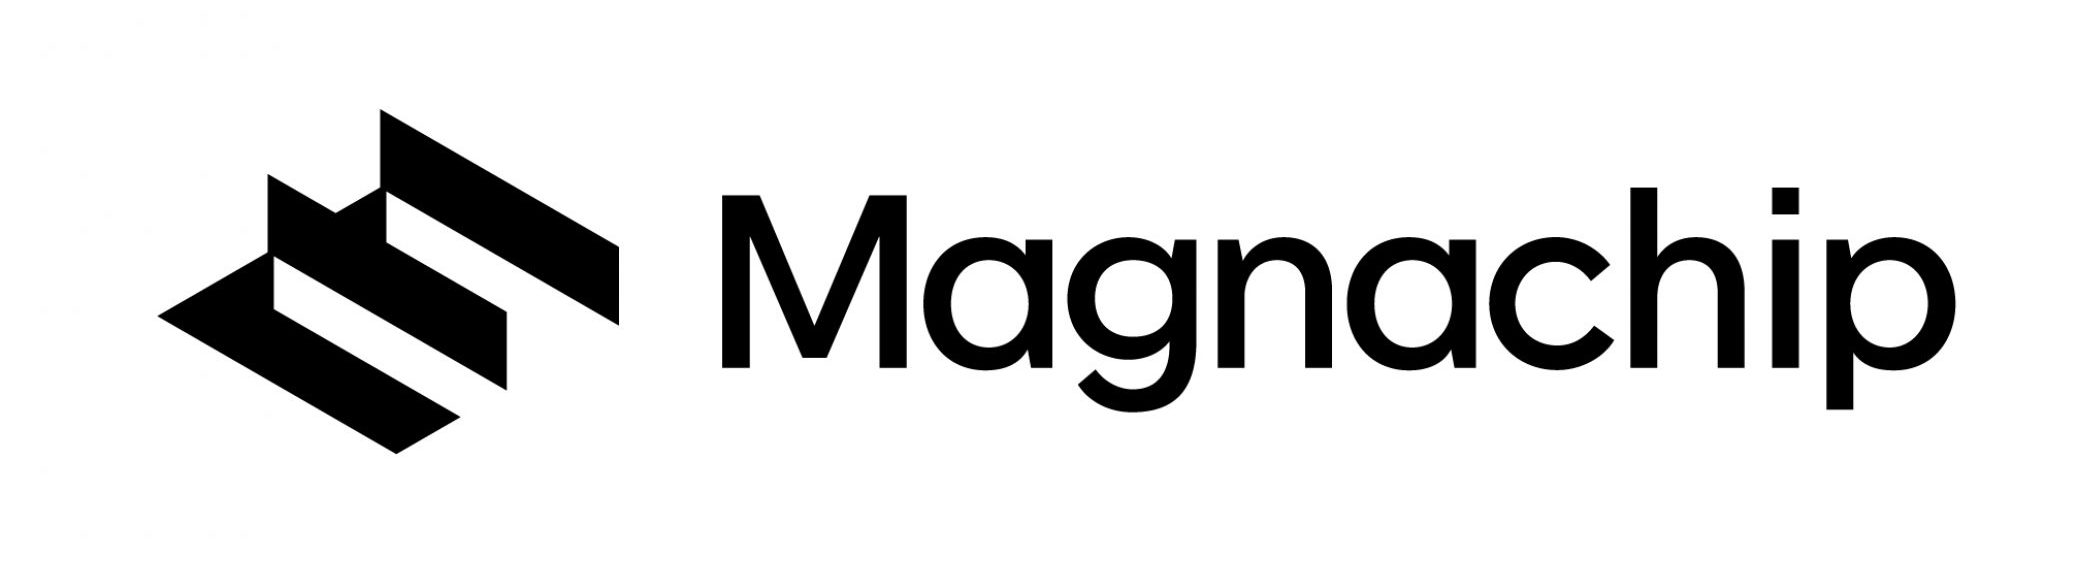 MagnaChip